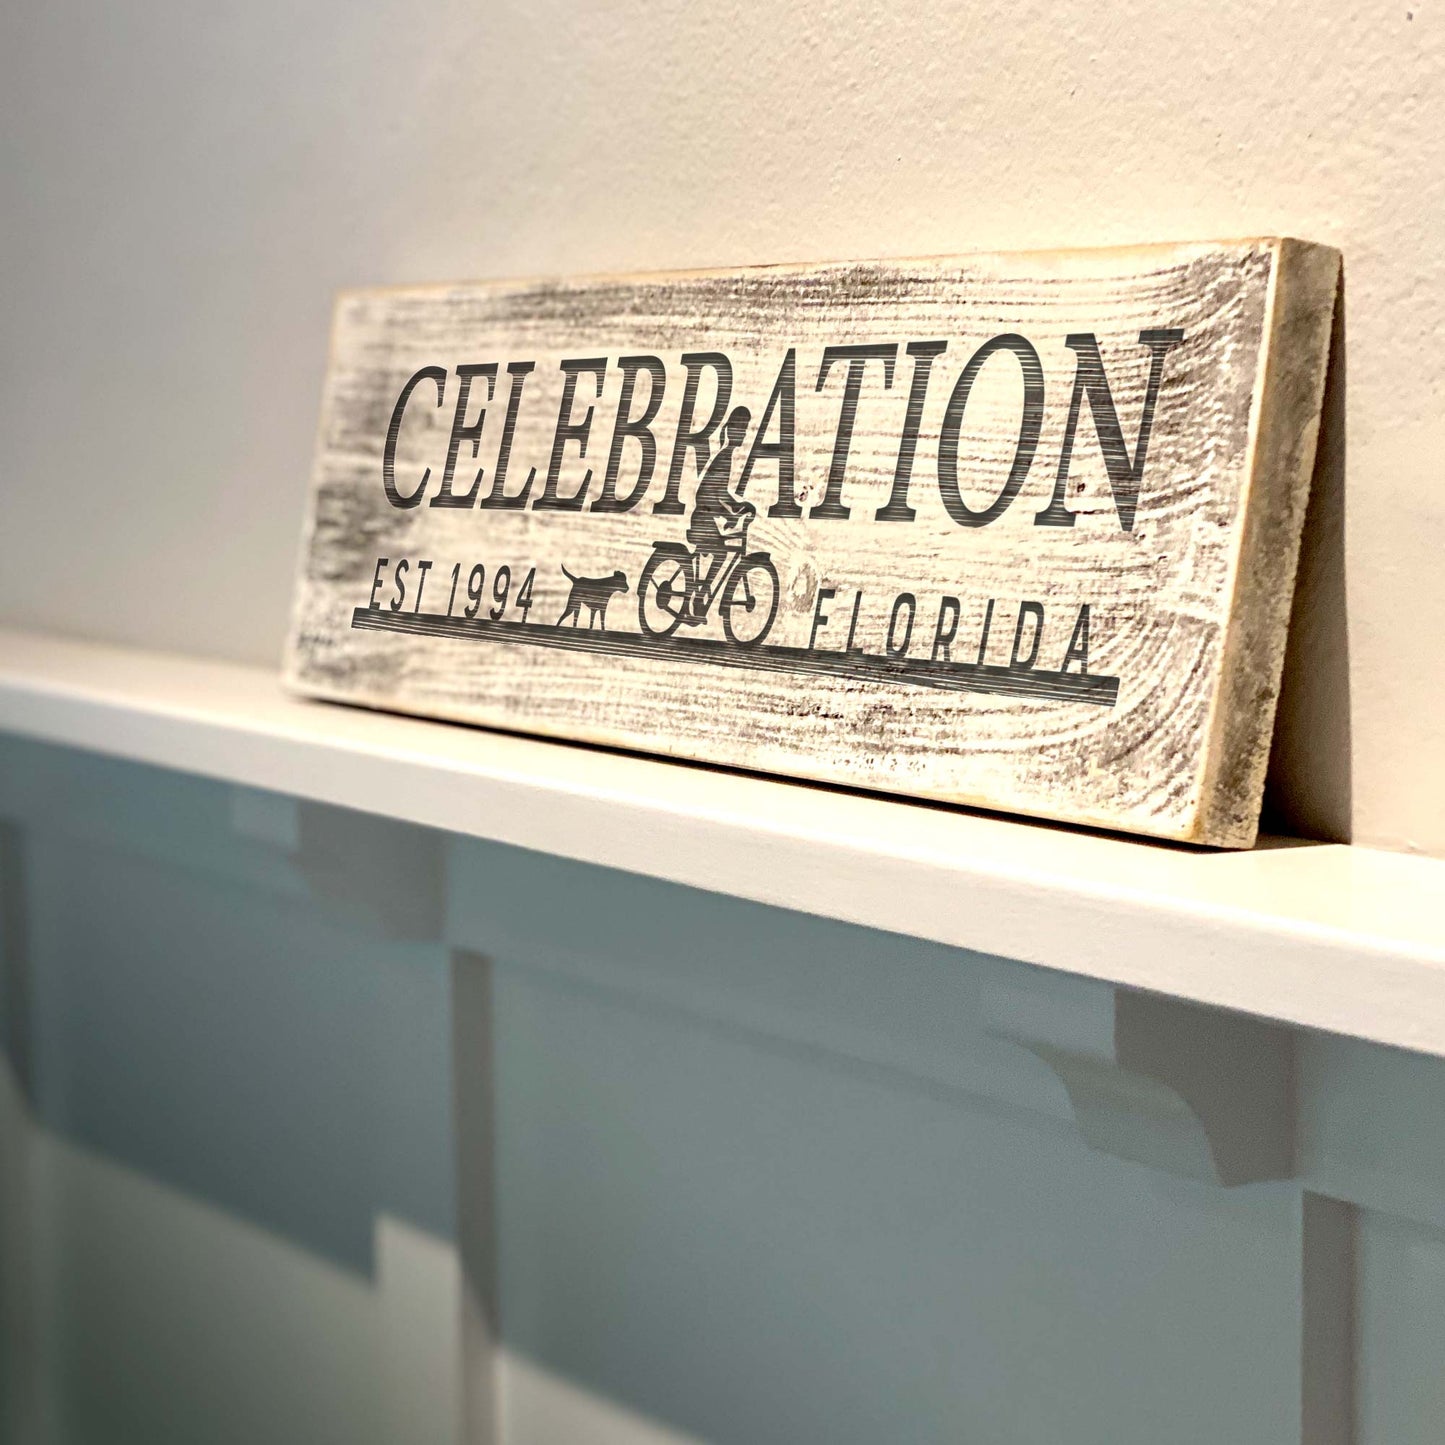 Celebration - Handcrafted Artisan Wood Sign